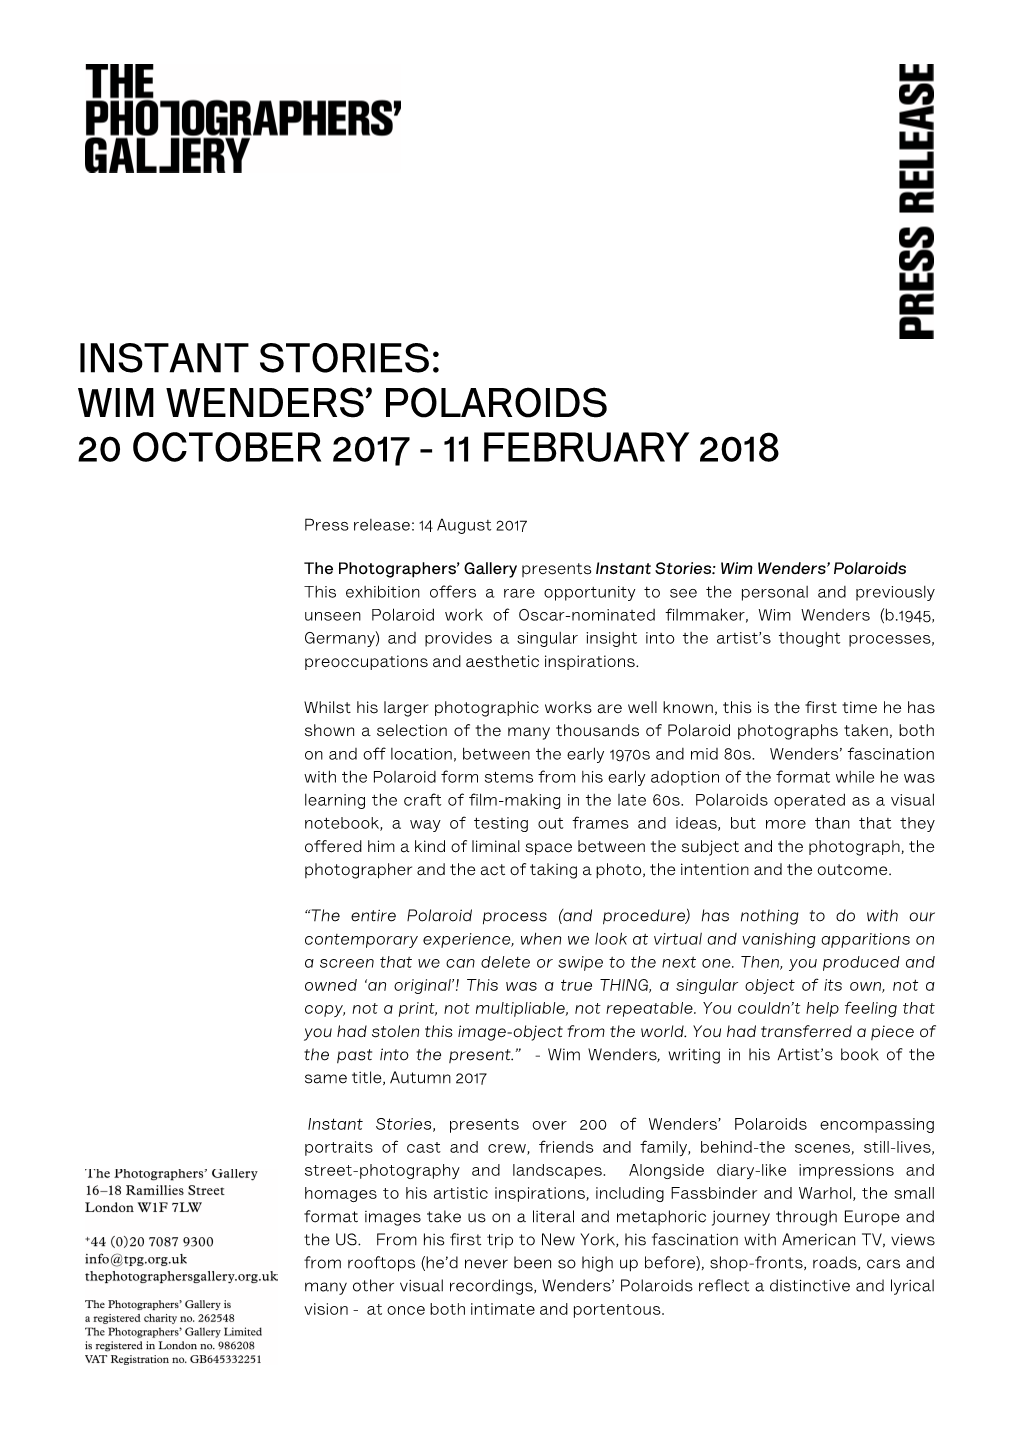 Wim Wenders' Polaroids 20 October 2017